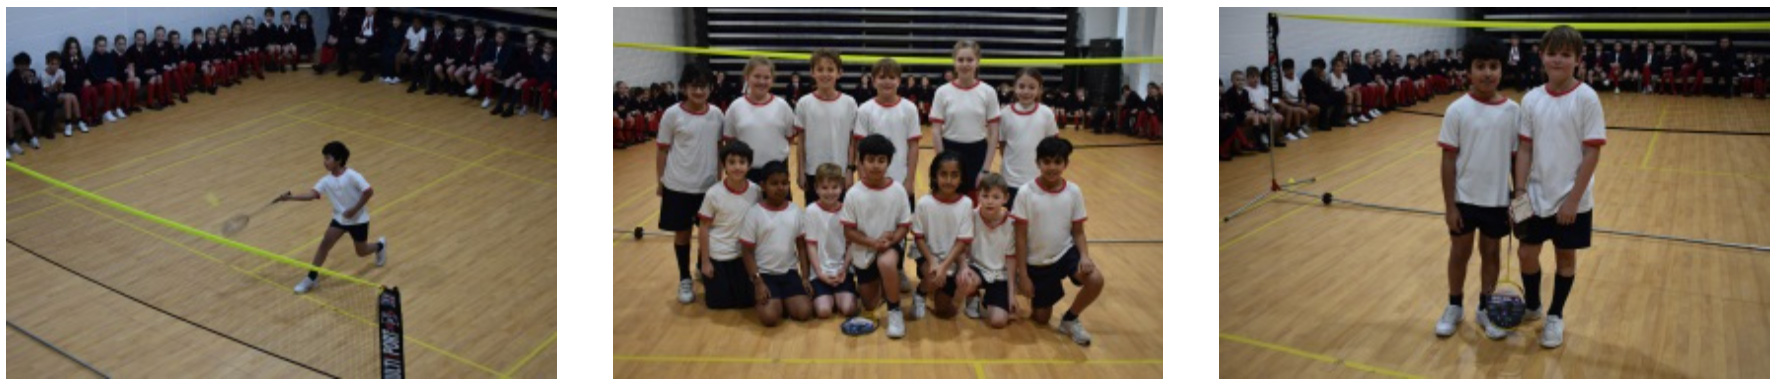 Fairholme Preparatory School: Battling it out at Badminton